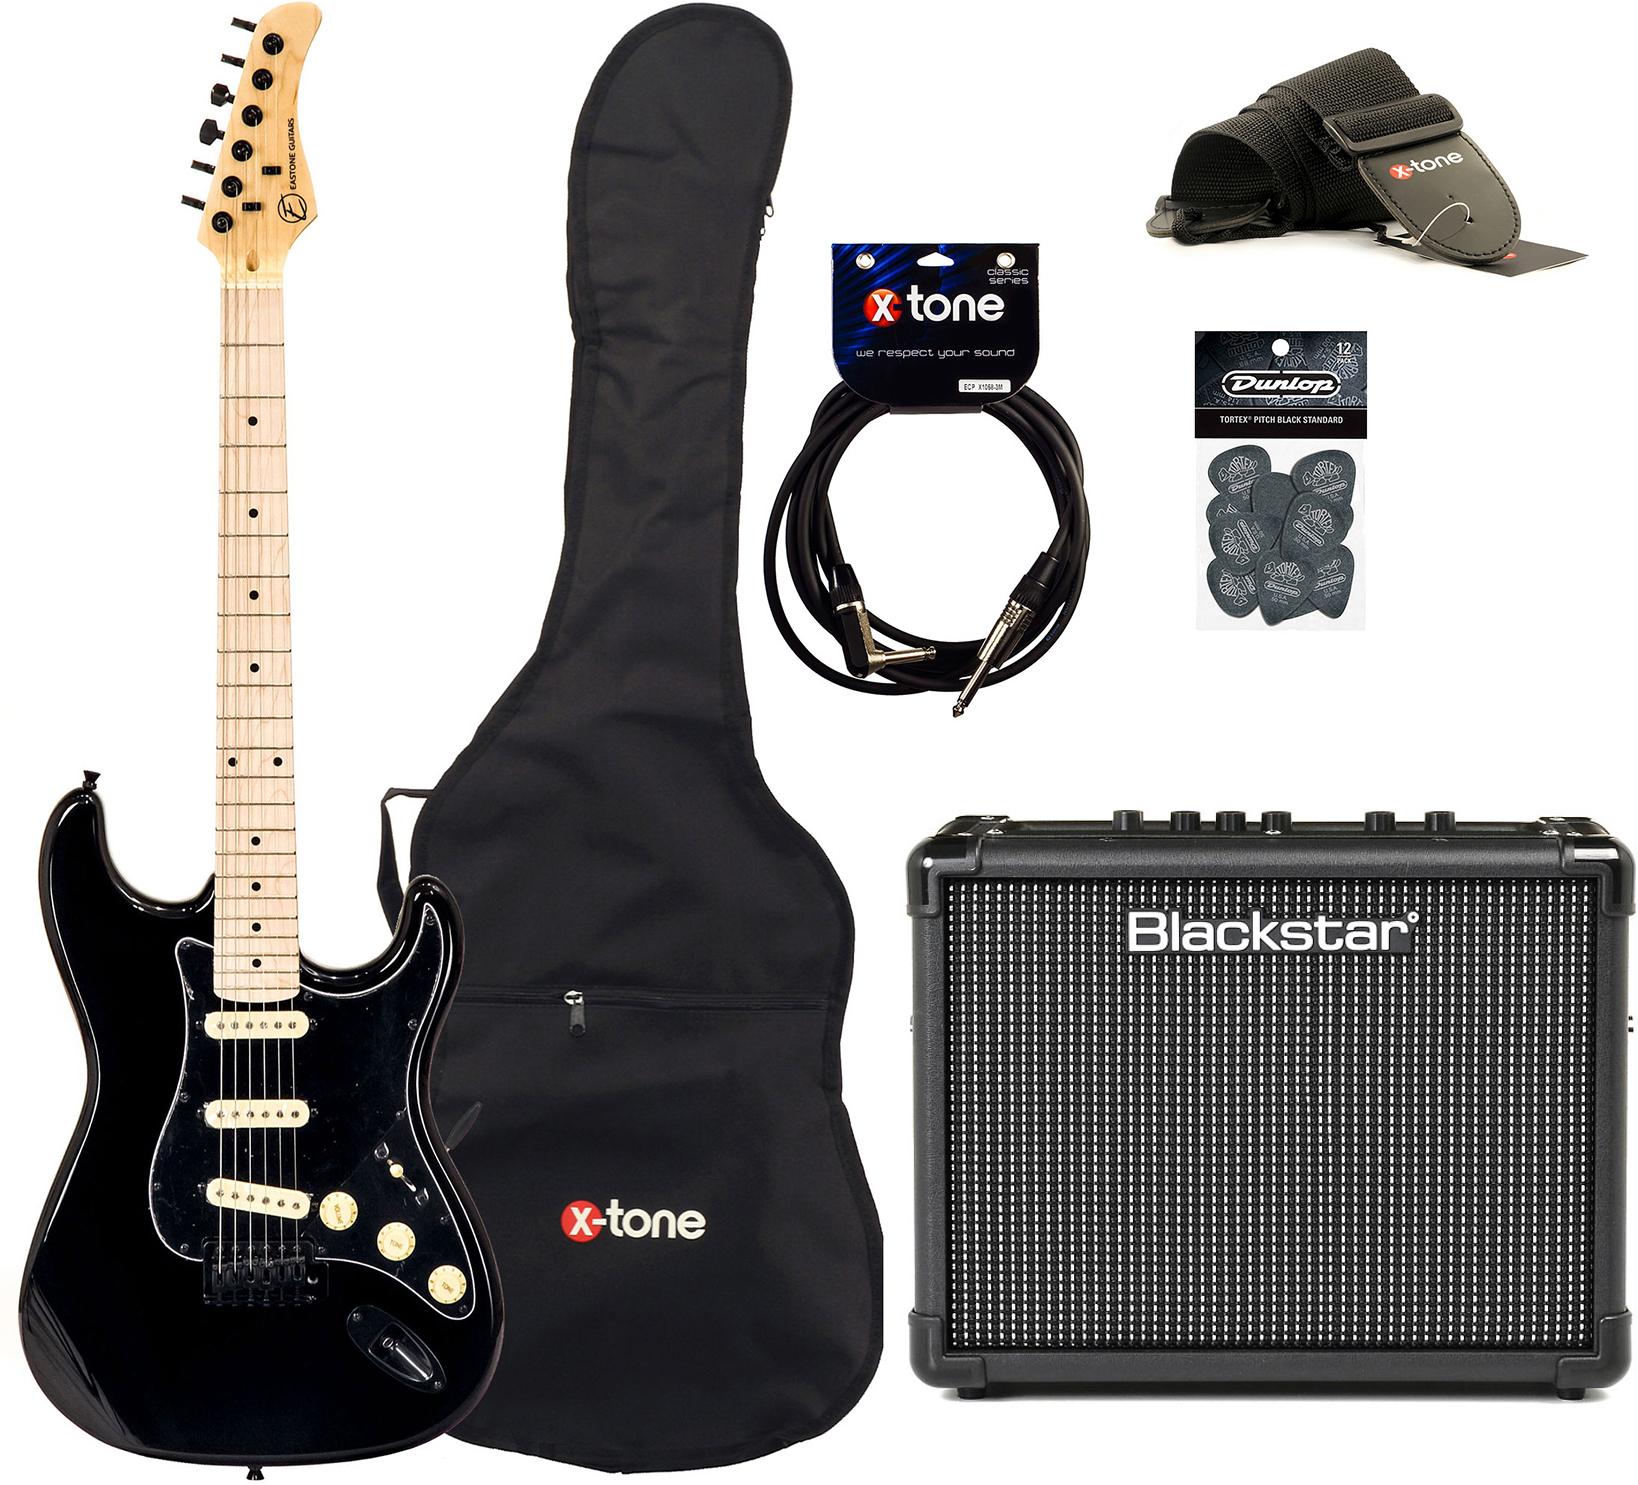 Eastone Str70 Gil +blackstar Id Core Stereo 10w V3 +cable +housse +courroie +mediators - Black - E-Gitarre Set - Main picture